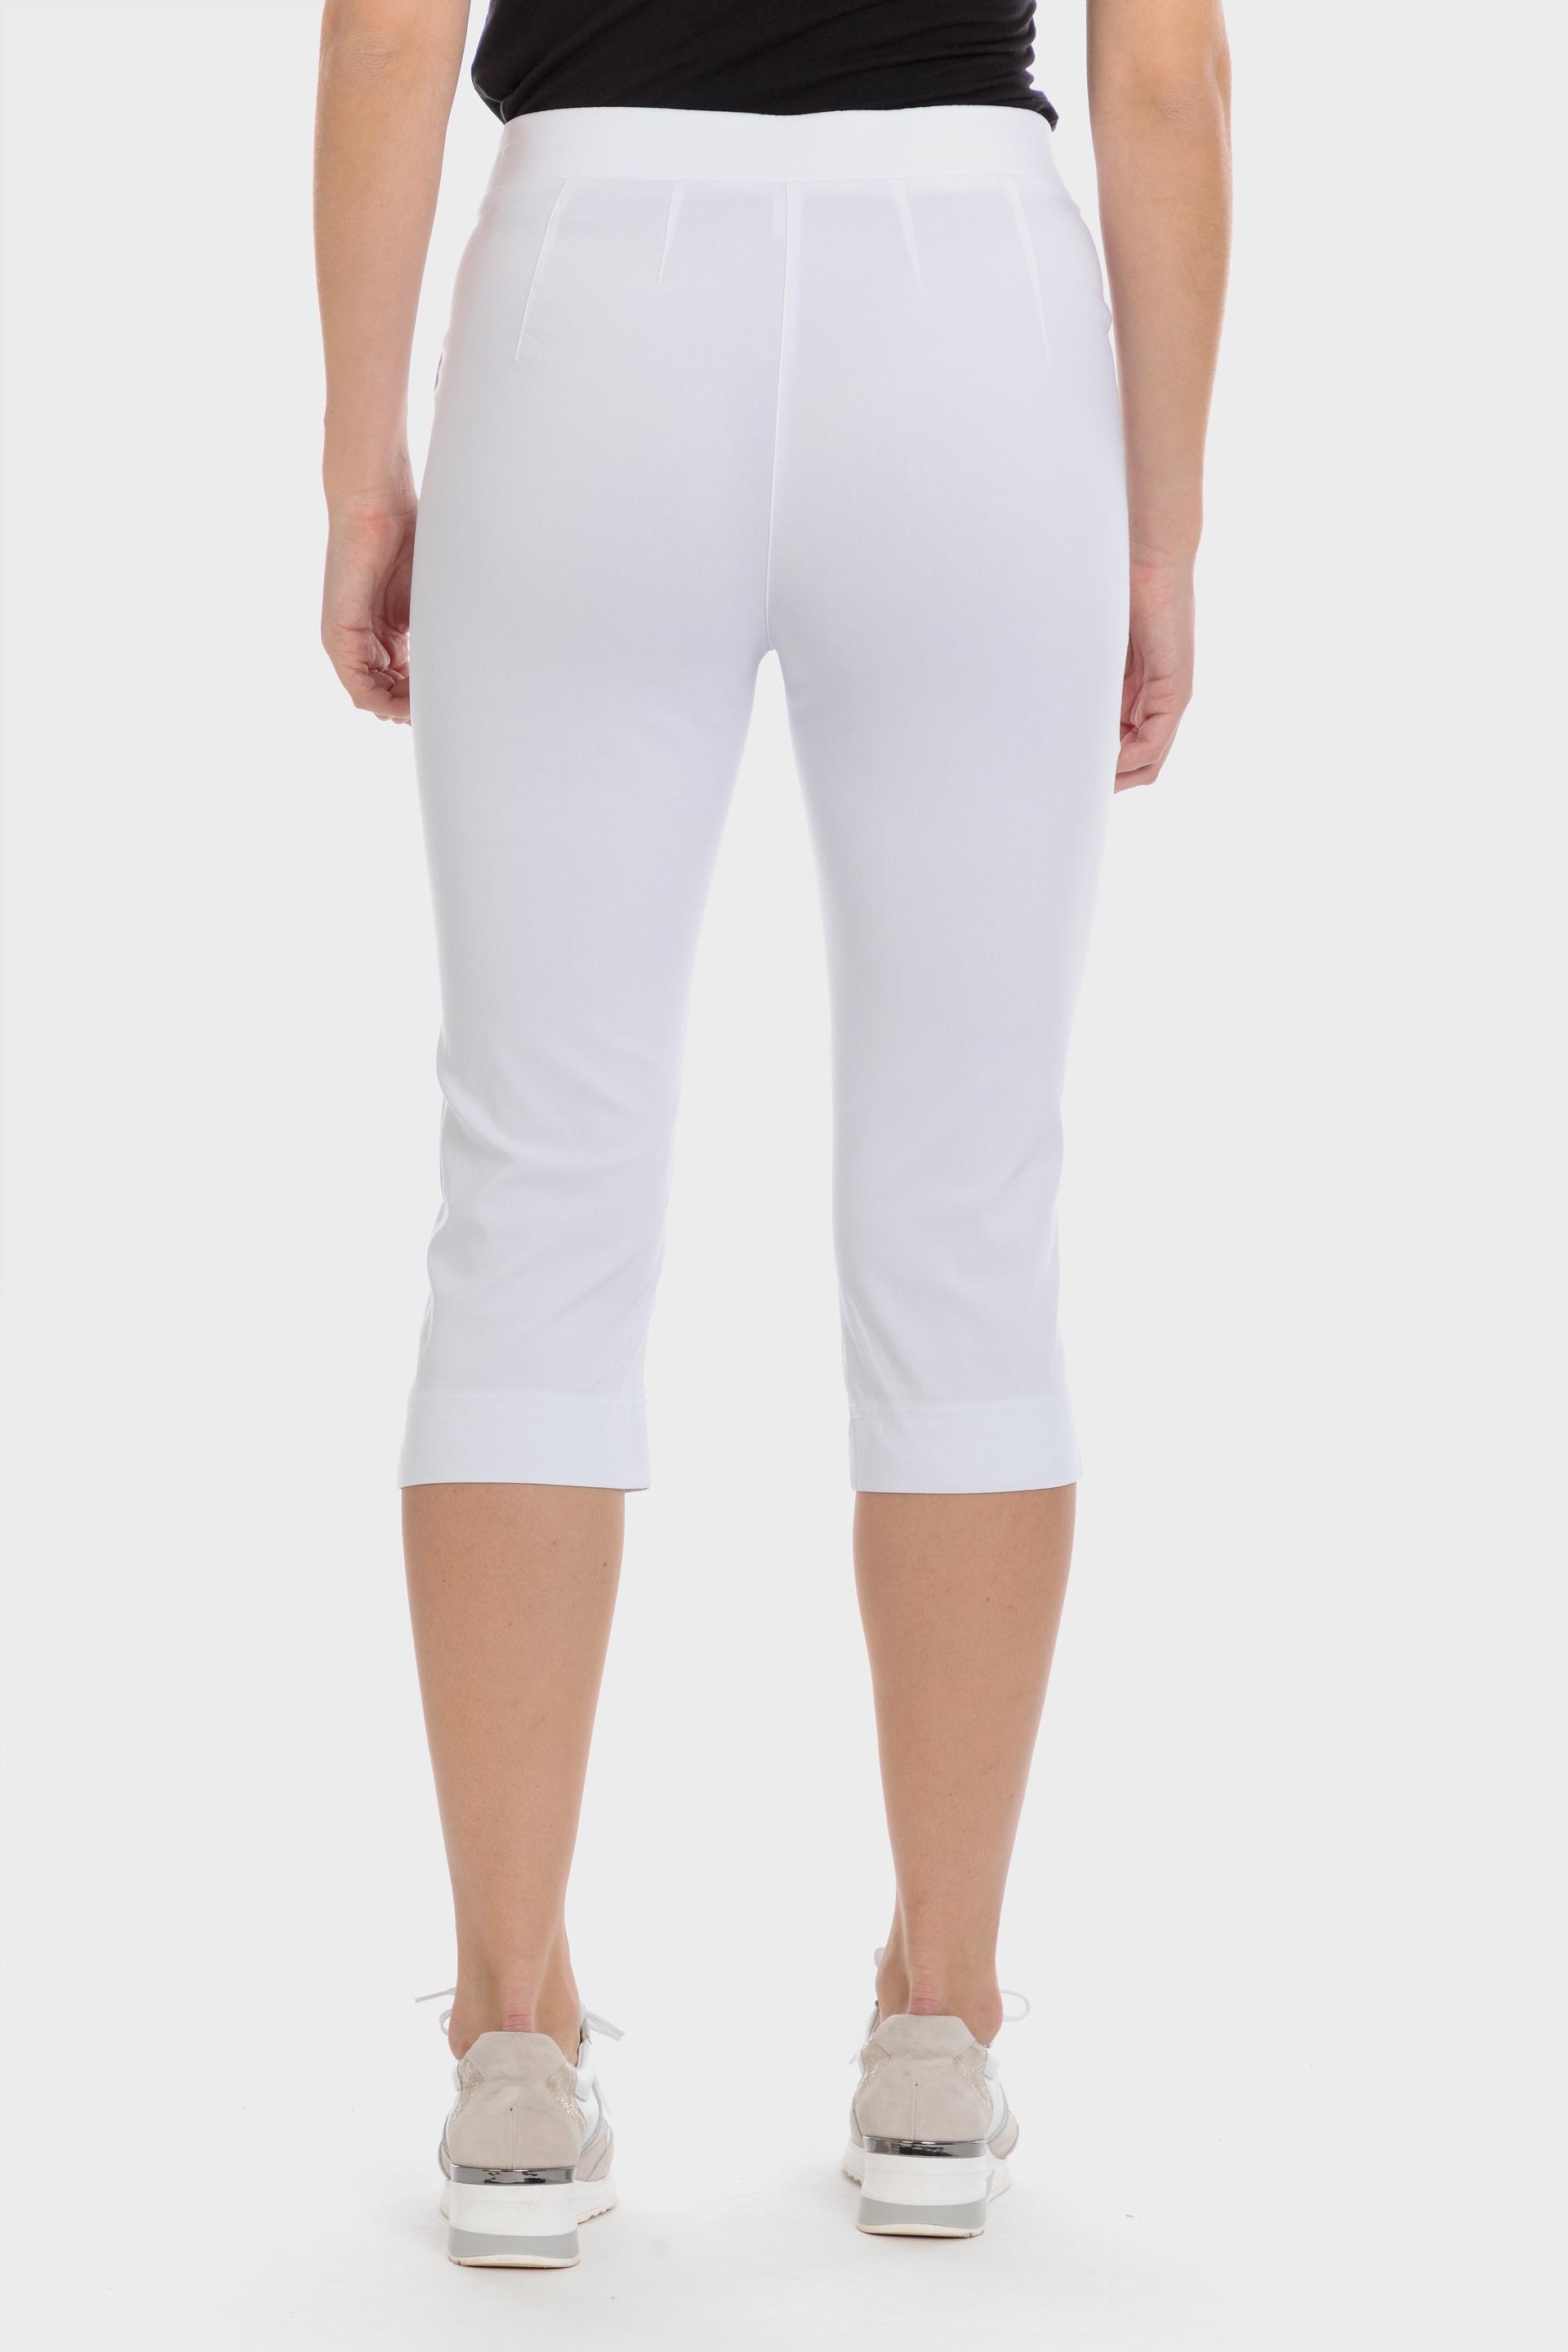 Punt Roma - White Bengaline Crop Trousers